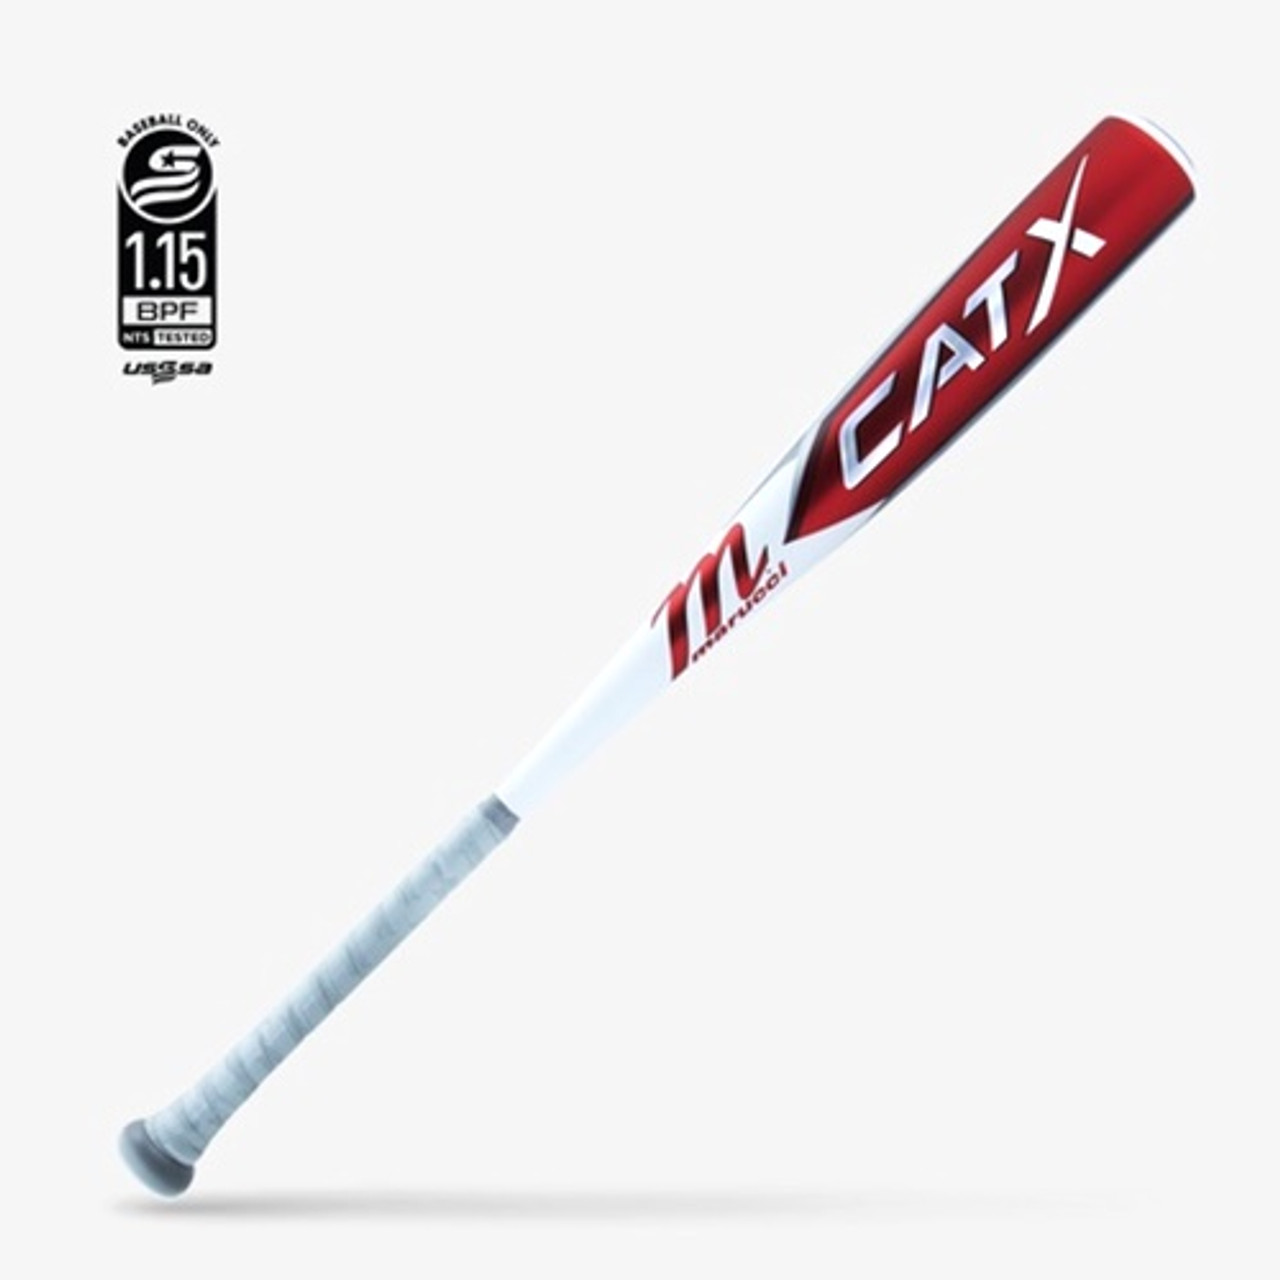 marucci-cat-x-10-baseball-bat-28-inch-18-oz MSBCX10-2818   The CATX baseball bat boasts a number of advanced features for